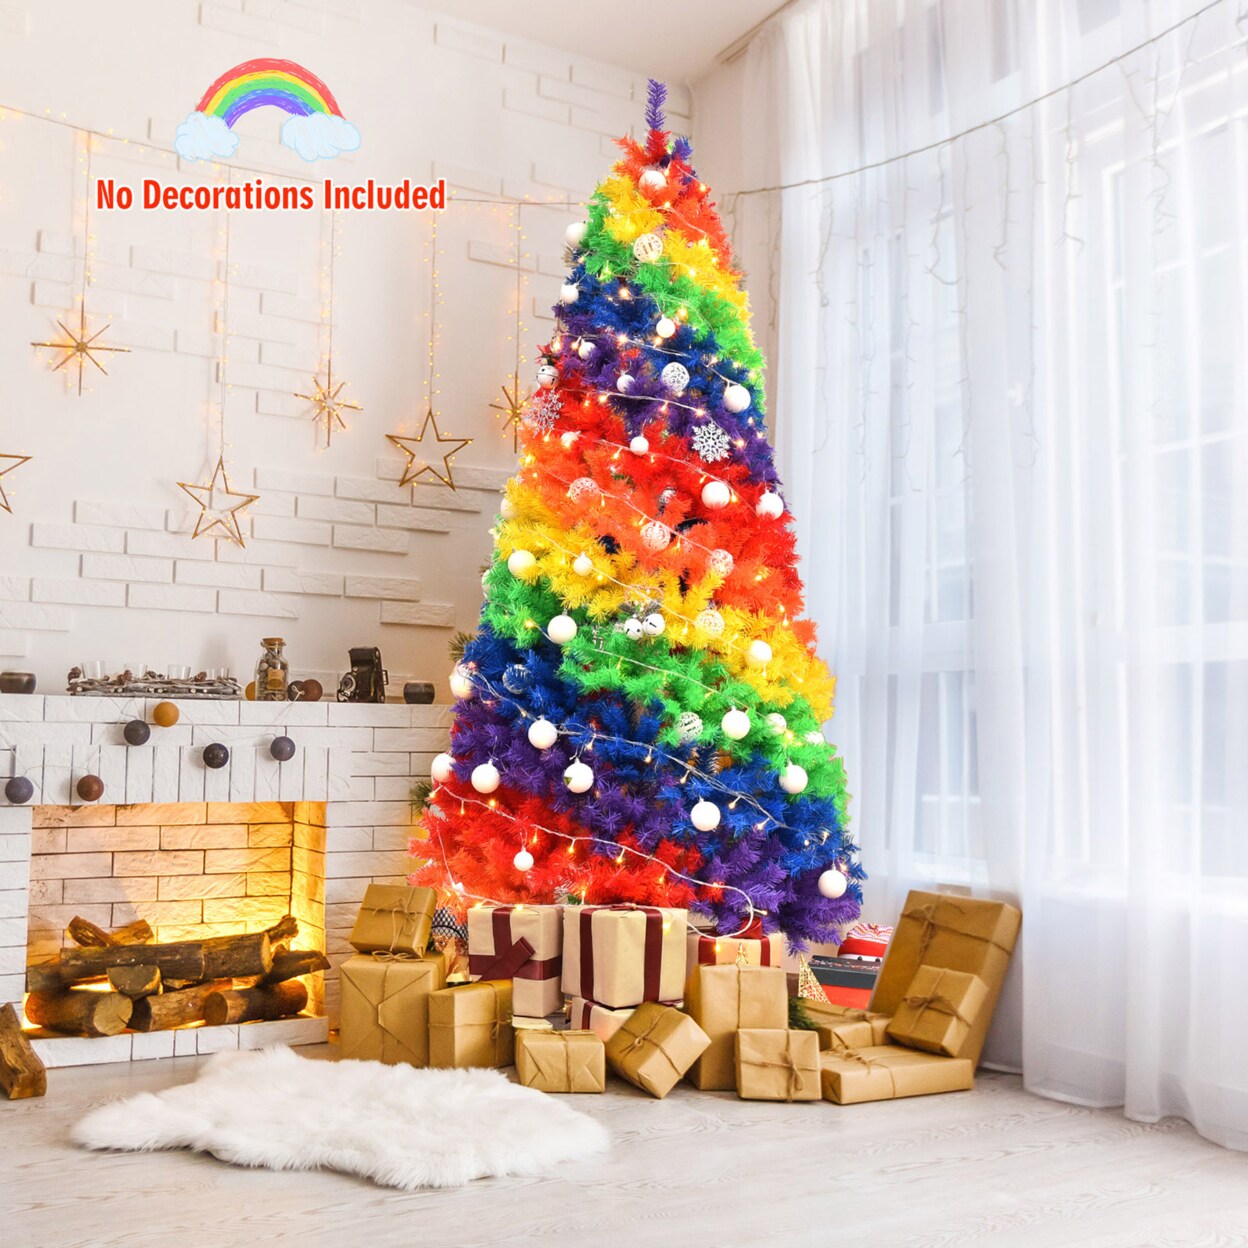 Gymax 7 ft Colorful Rainbow Hinged Christmas Tree Holiday Decor w/ Metal Stand